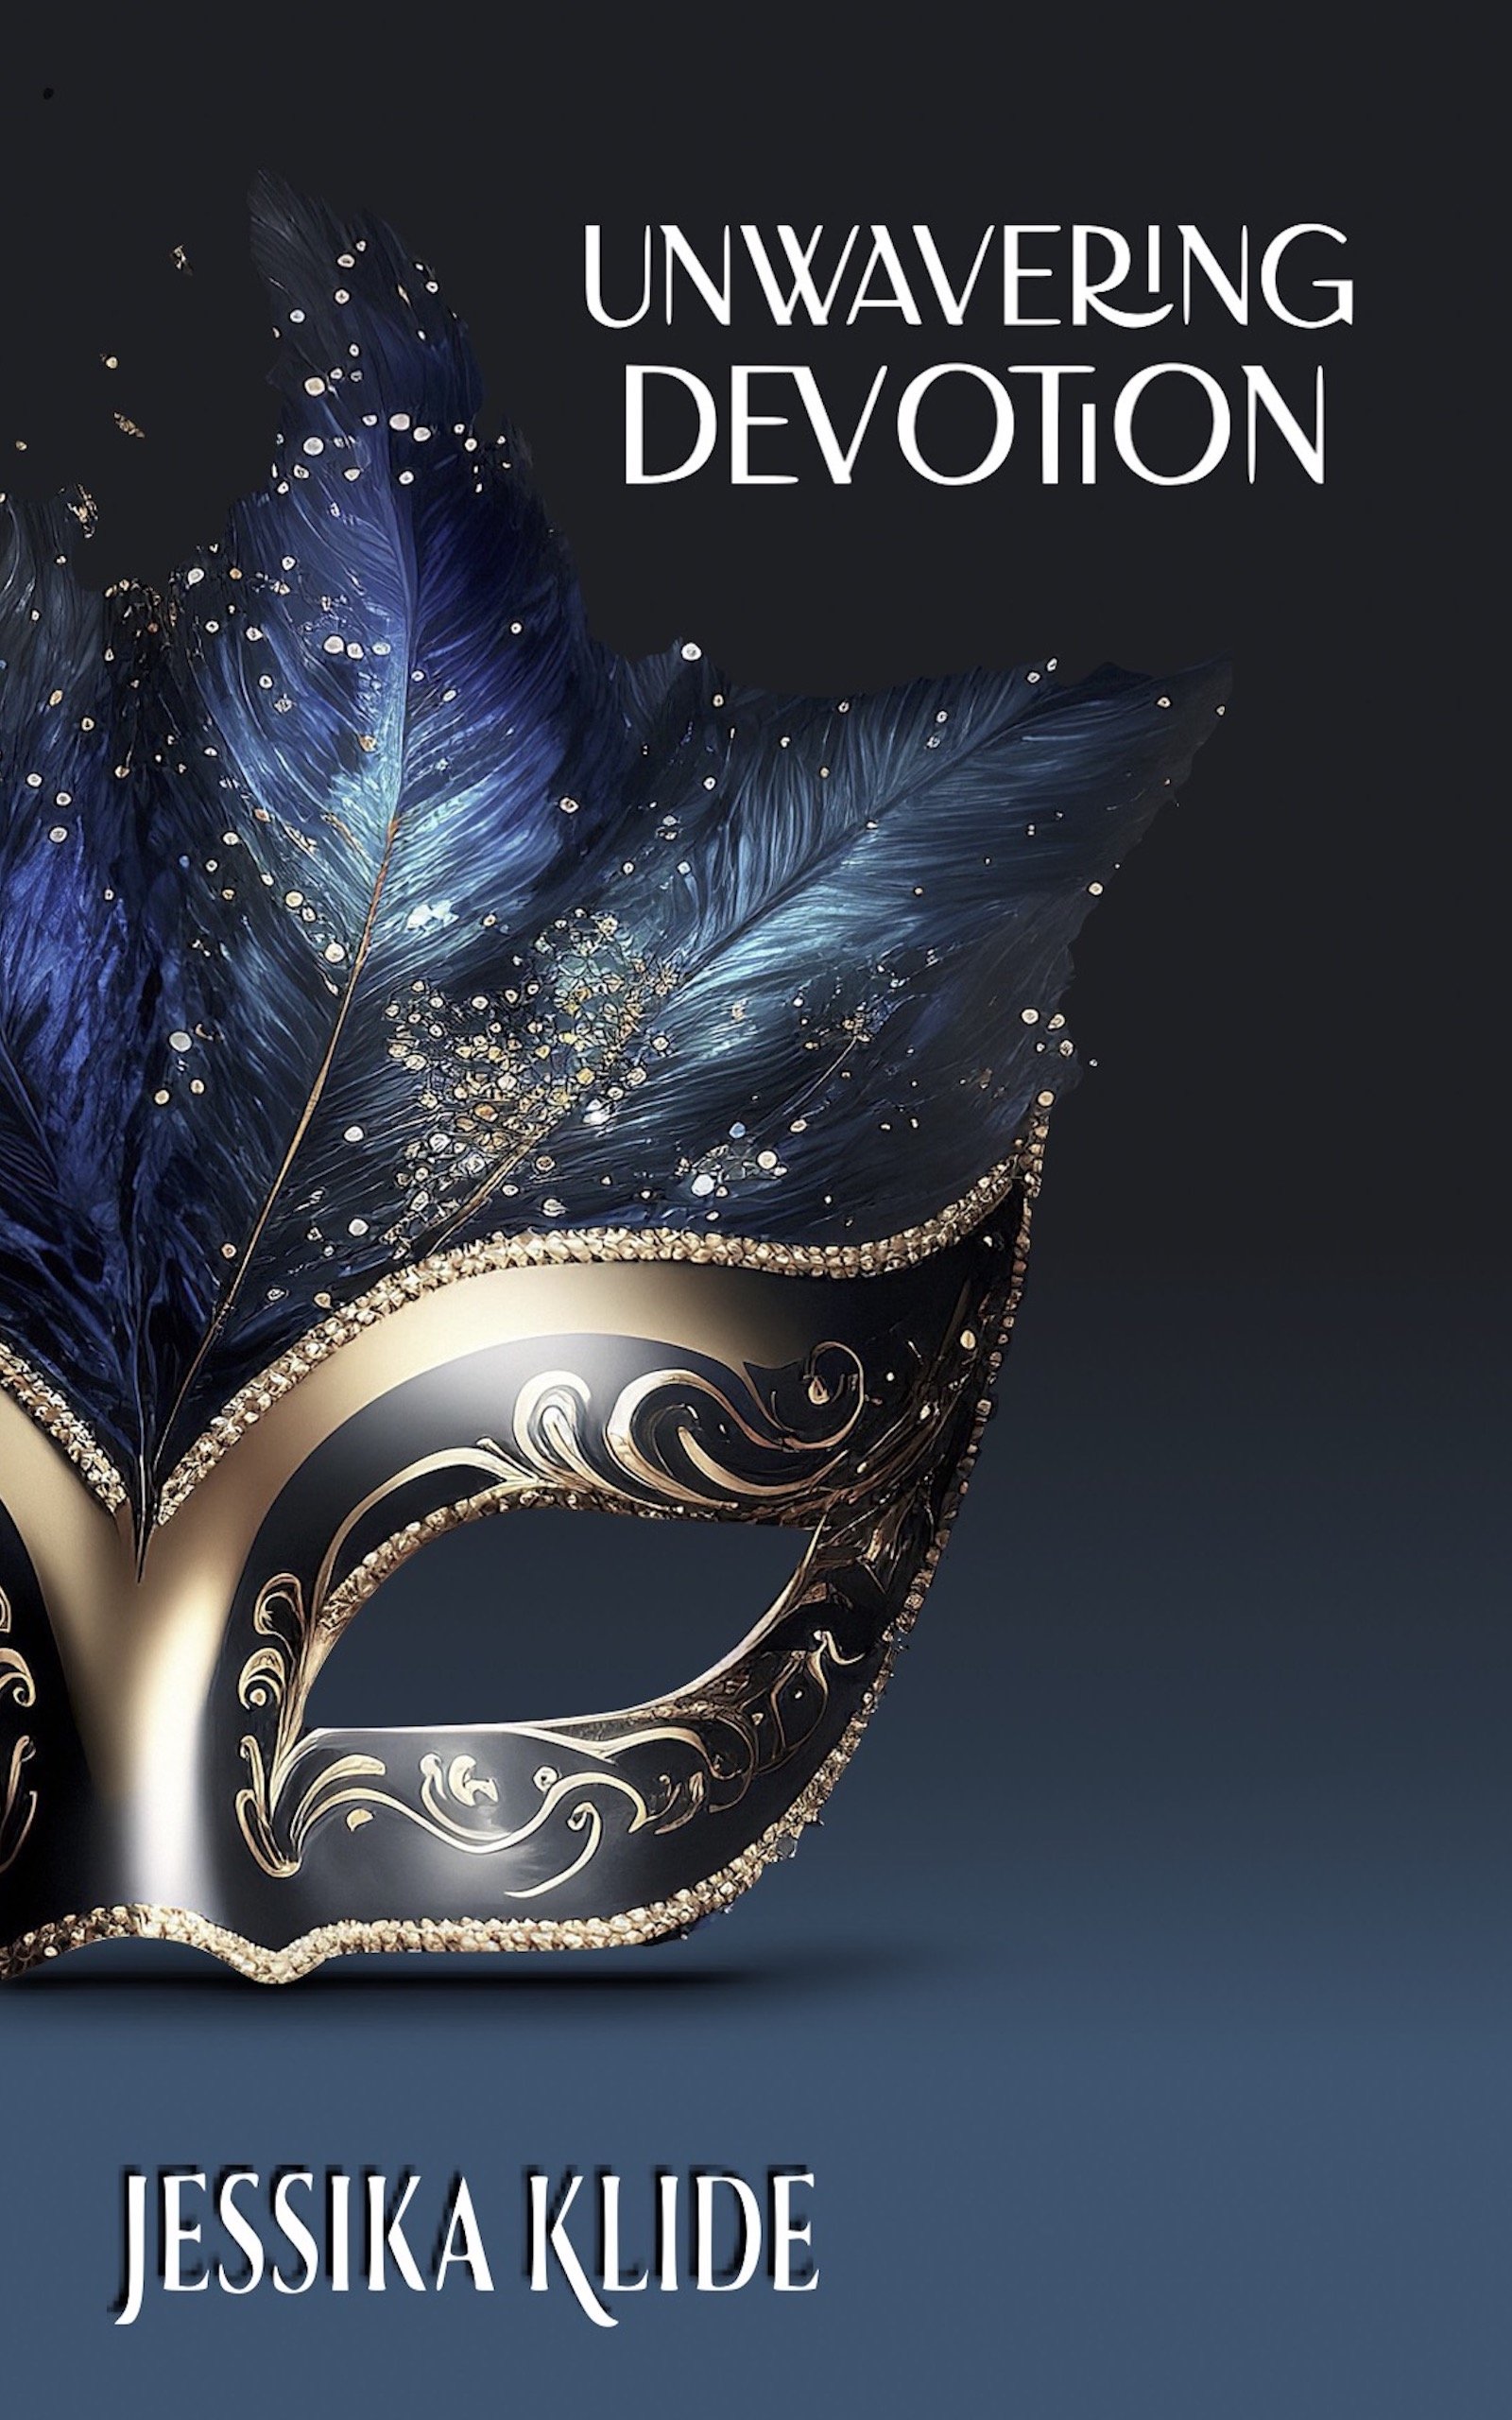 Unwavering Devotion ebook cover.jpg